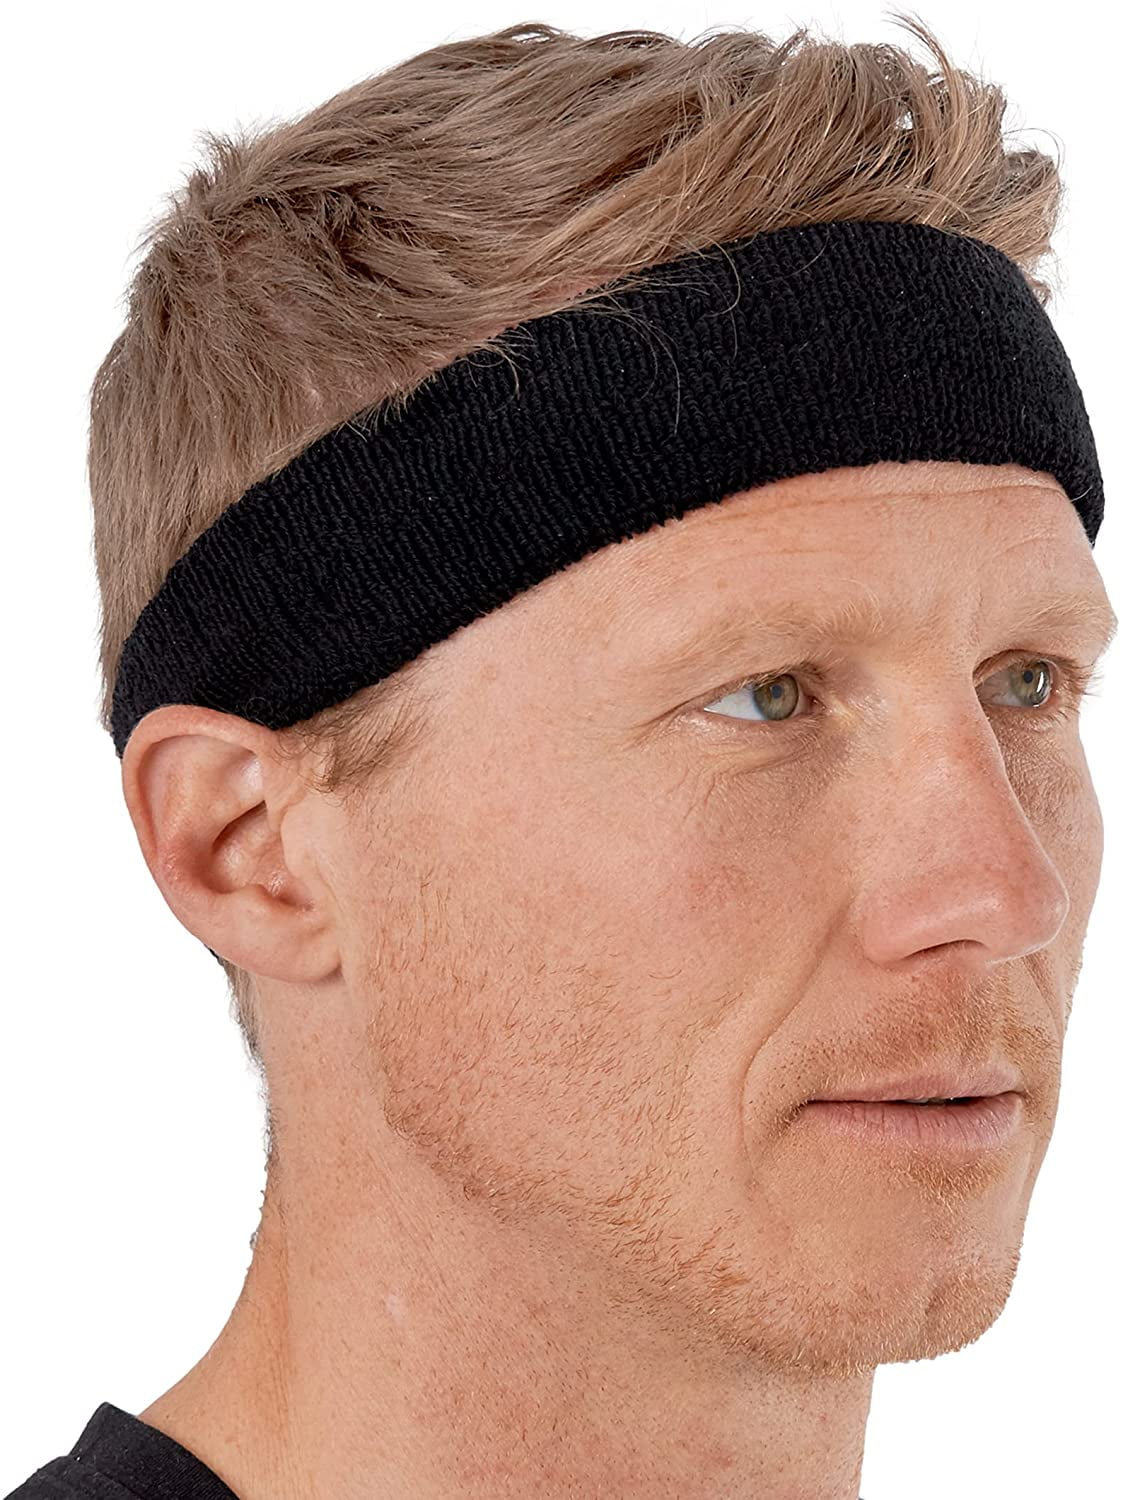 Details about   Men Wide Headband Sweatband Stretch Sweat Elastic Sport Yoga Run  Hairbands US 